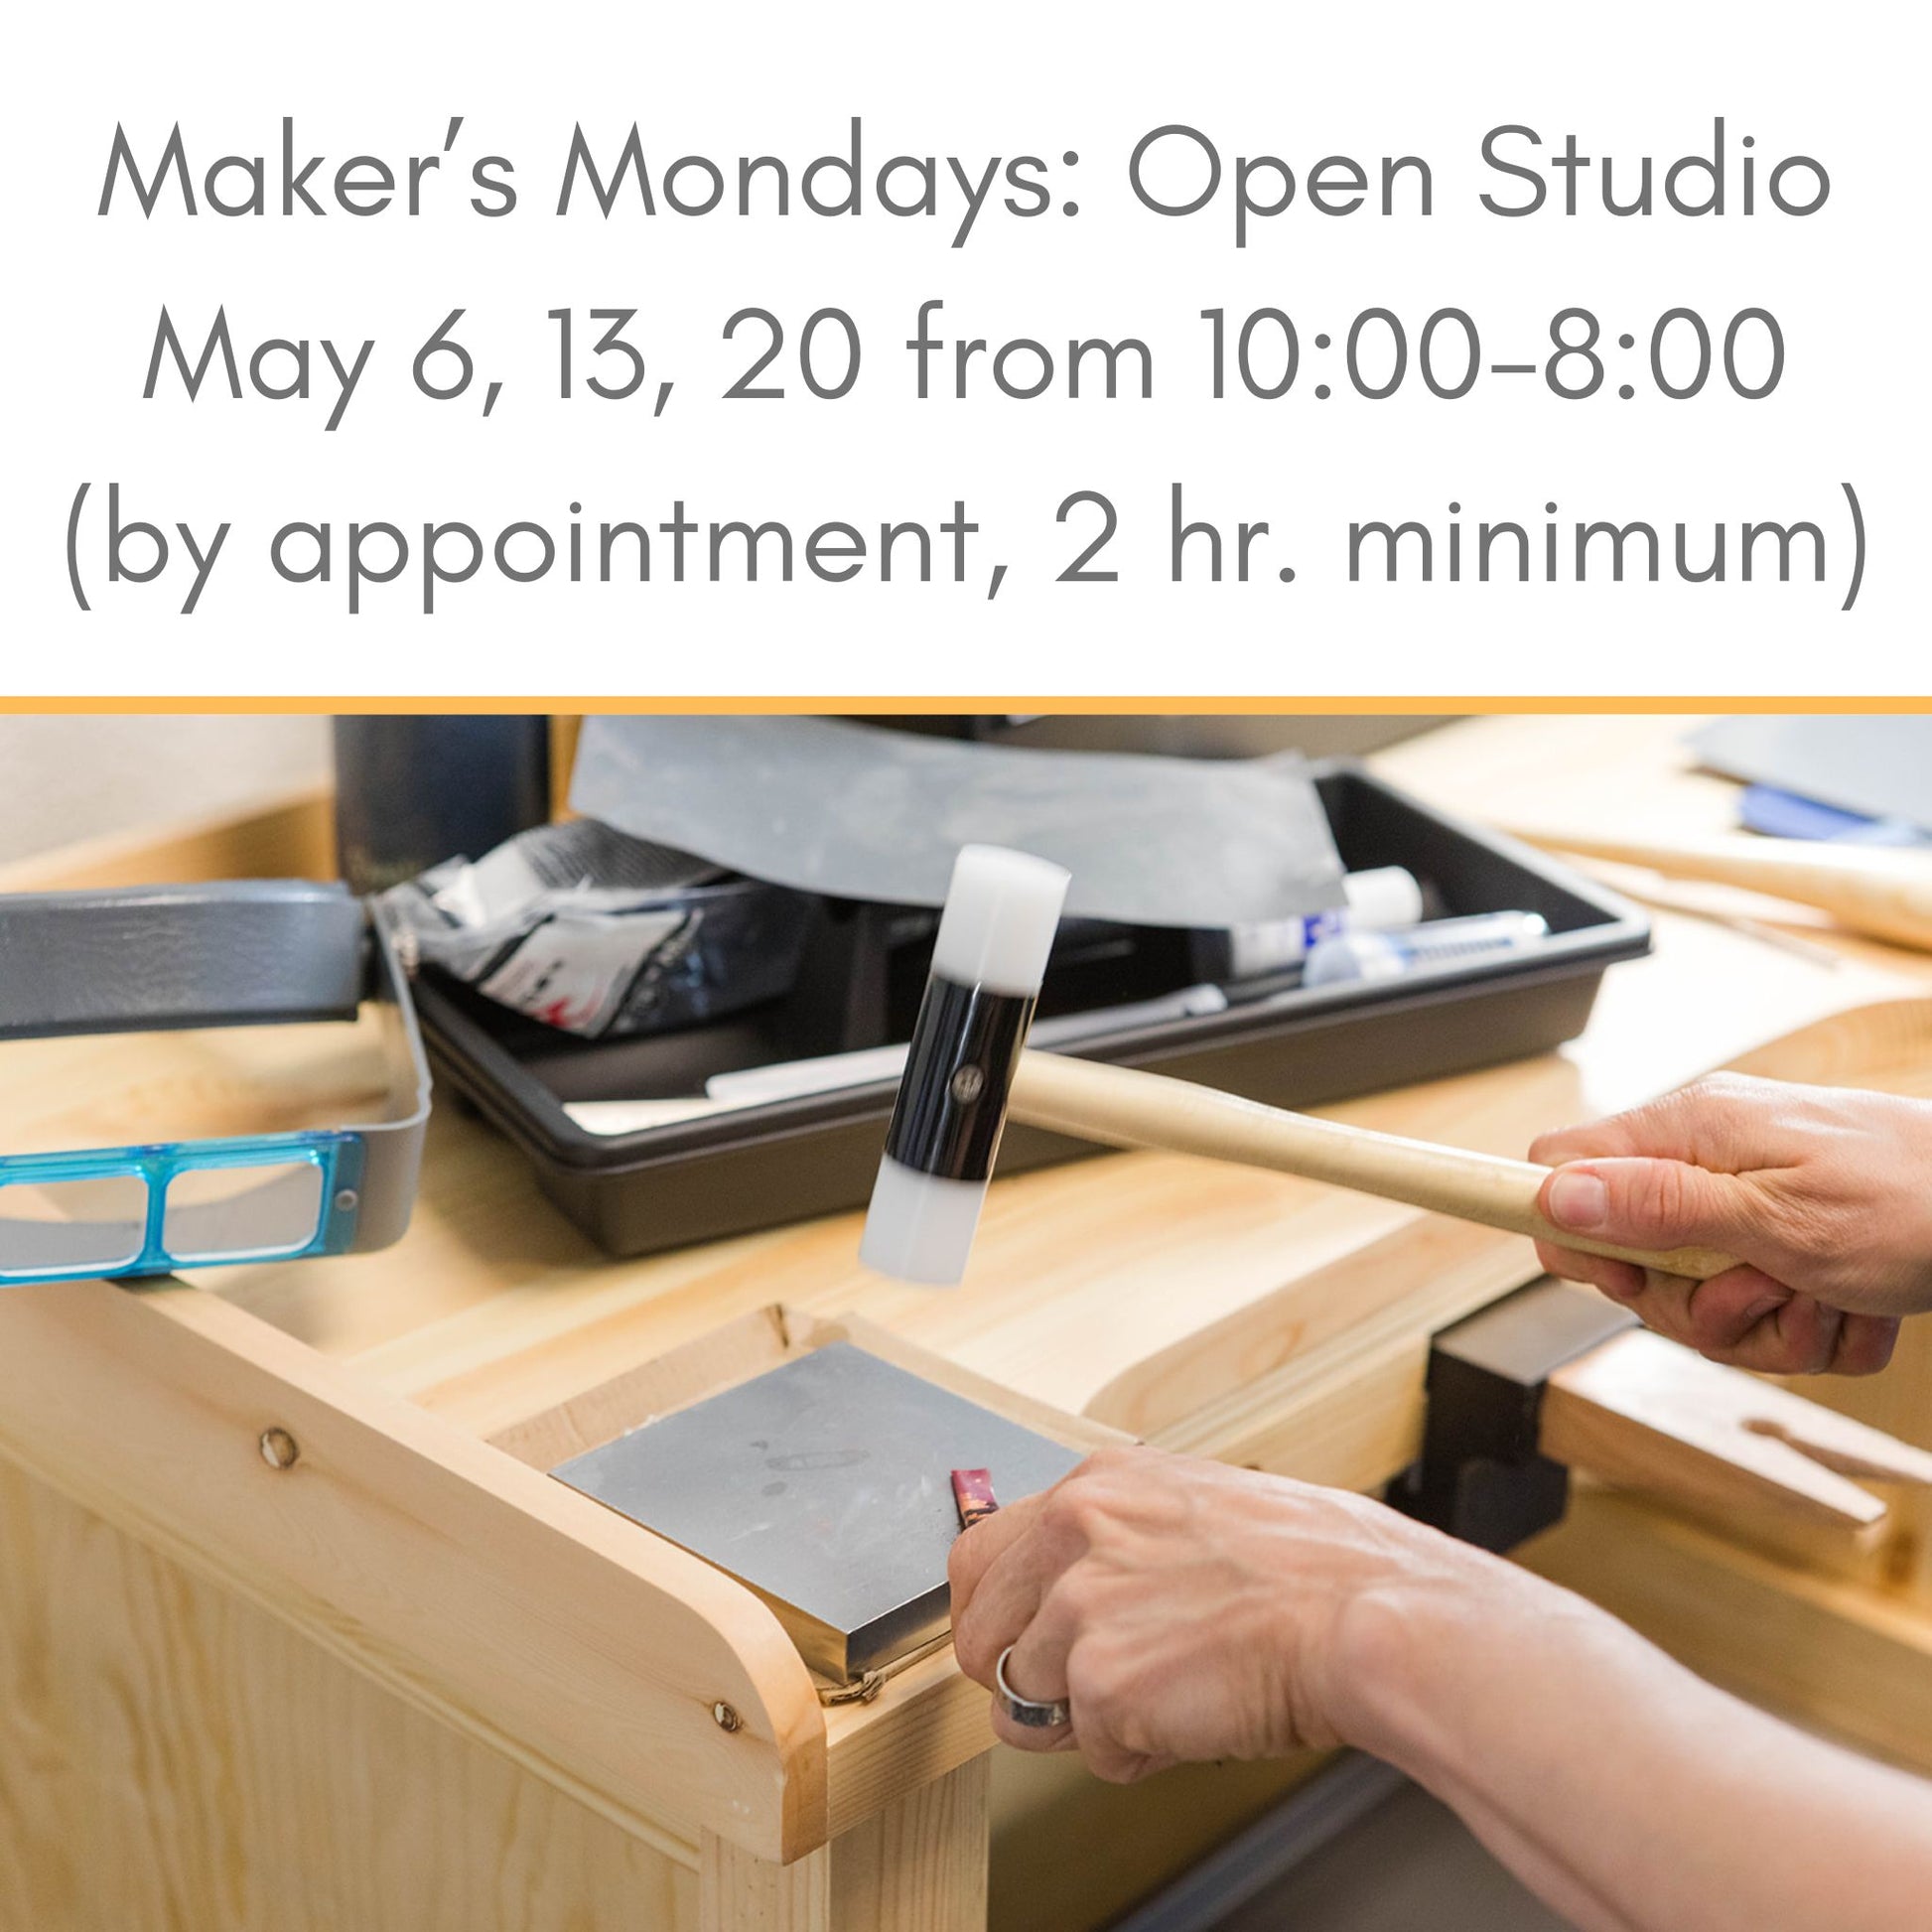 Maker Mondays Open Studio at Silver Peak Studio May 6, 13, 20